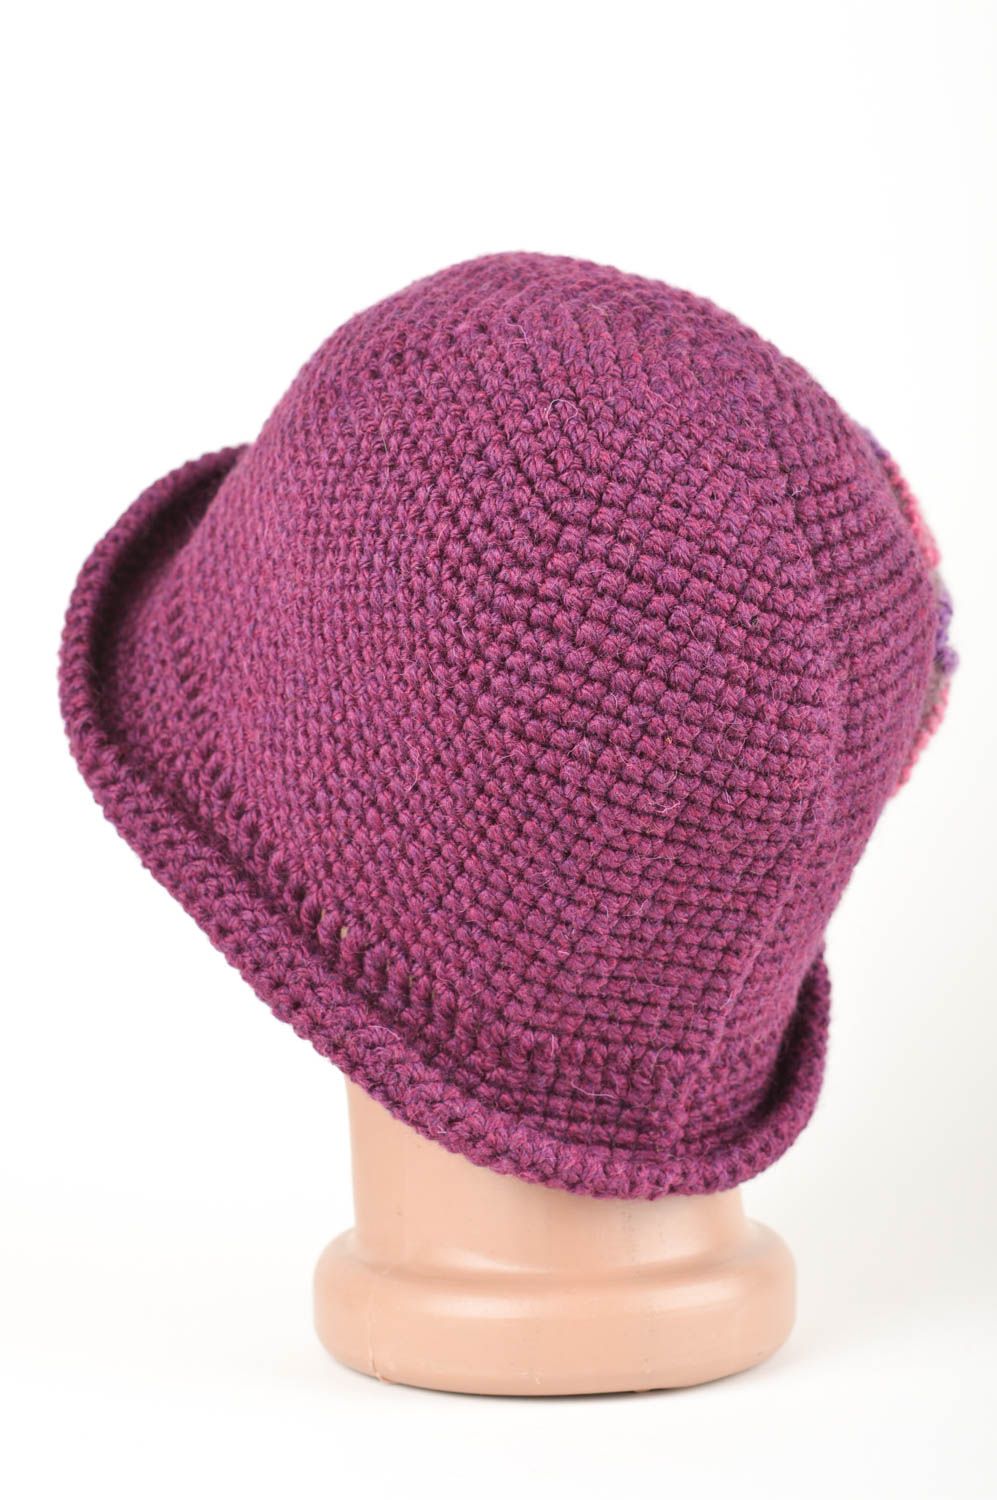 Crochet hat handmade ladies hat womens hat crochet accessories gifts for her photo 5